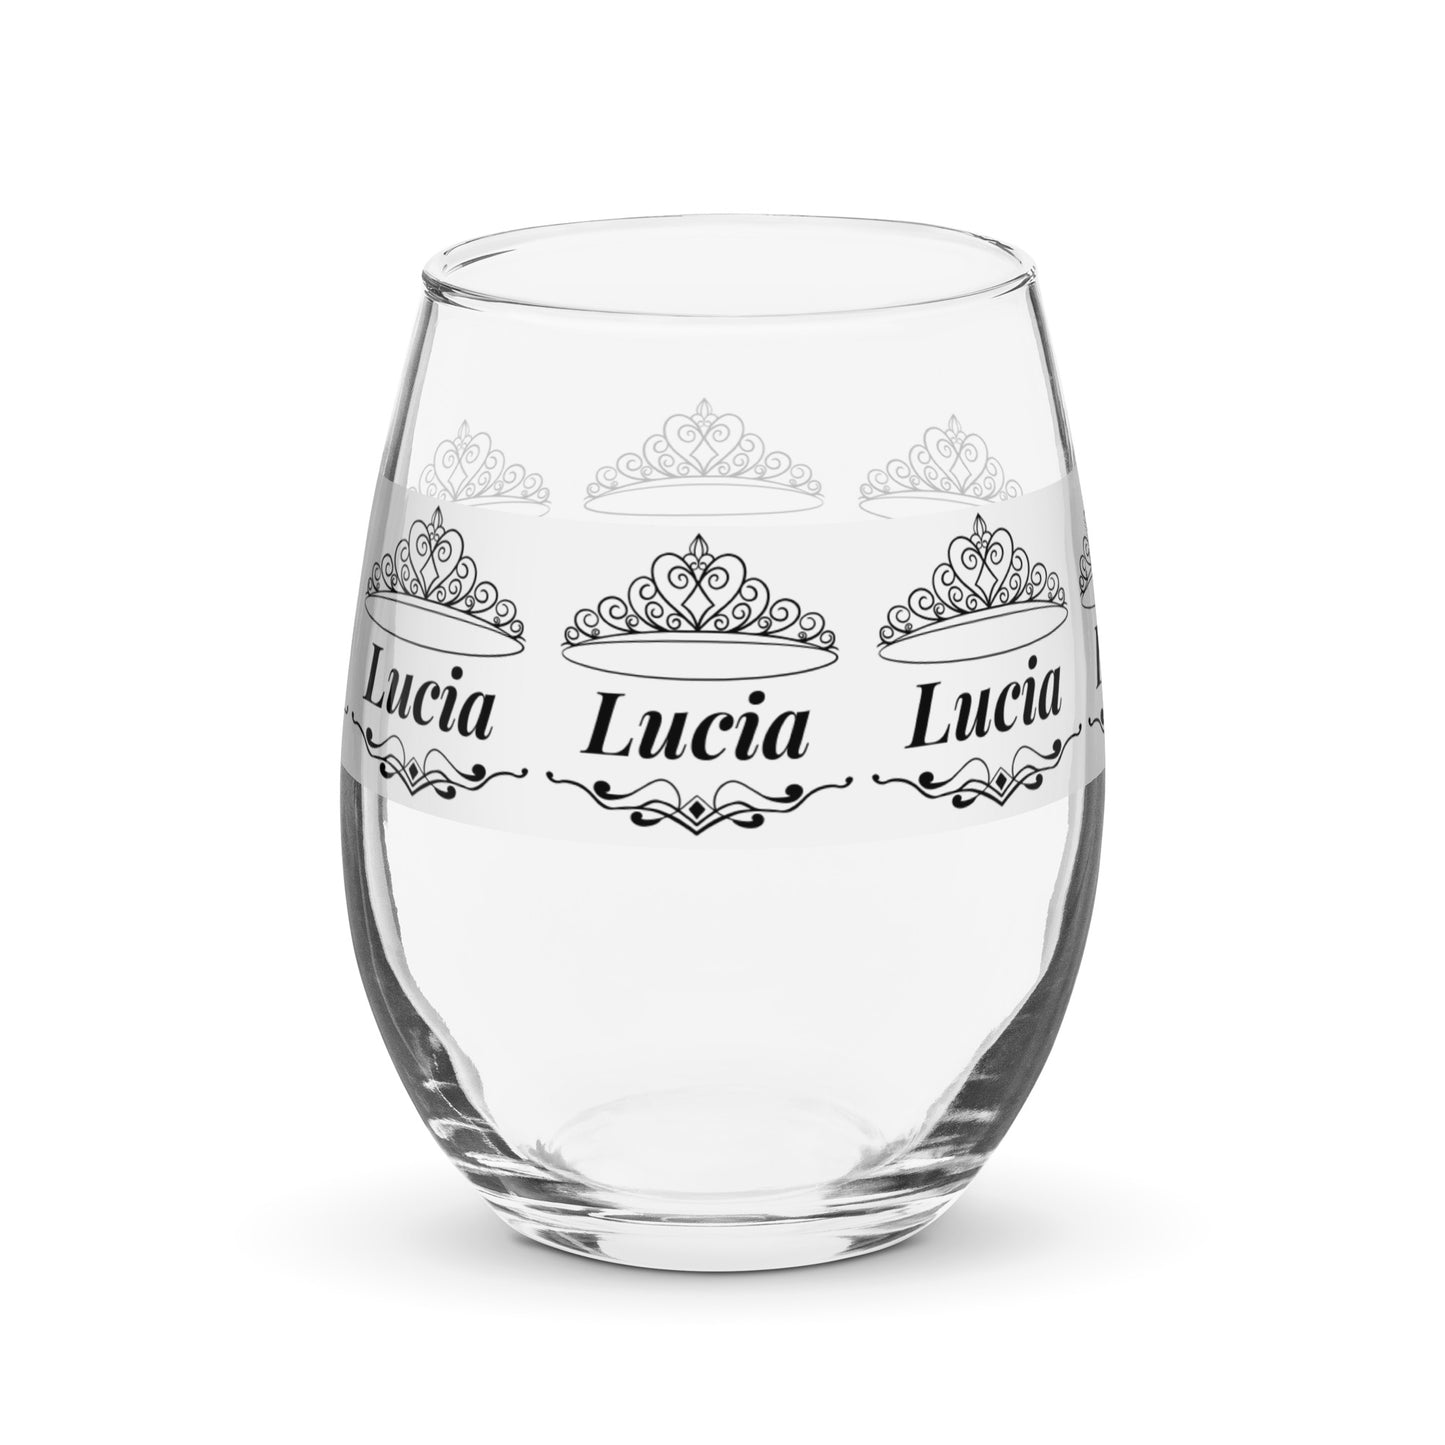 lucia name wine glass personalized wine glass wine glass